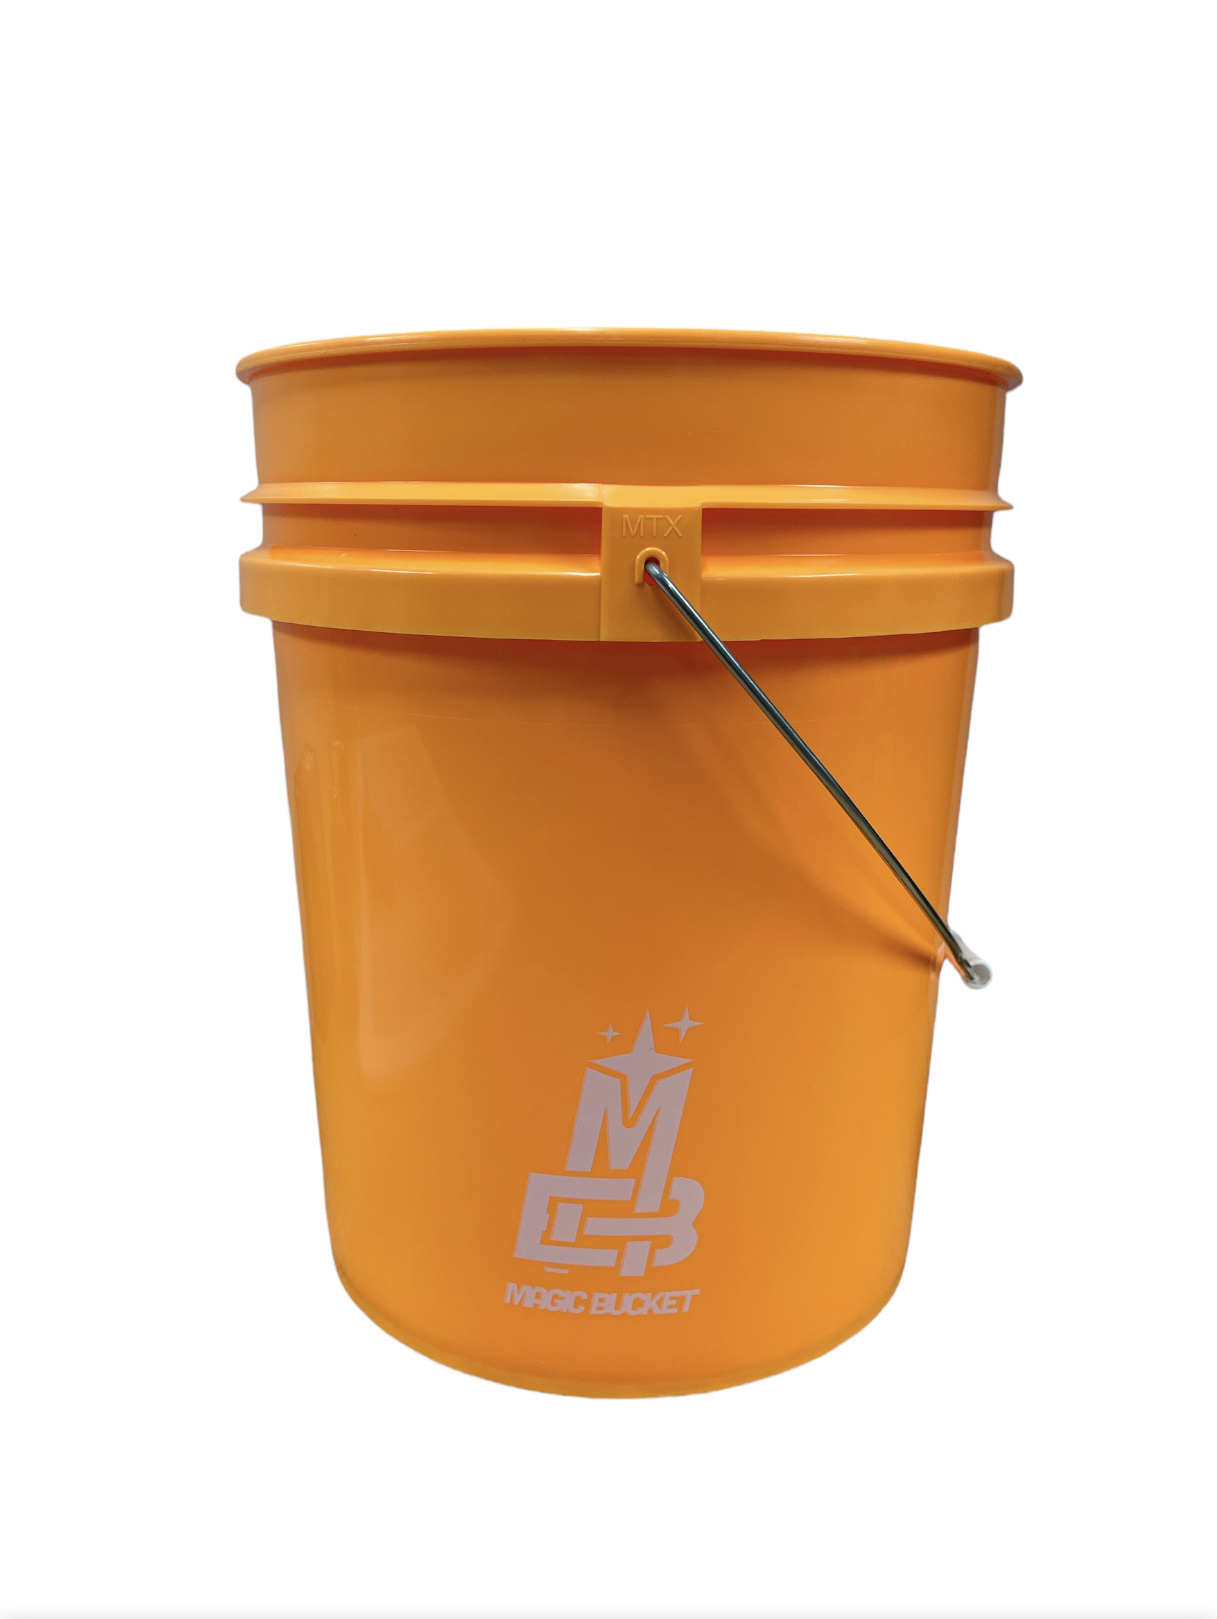 Nuke Guys - Orange Bucket 5 Gallon - Carchemicals